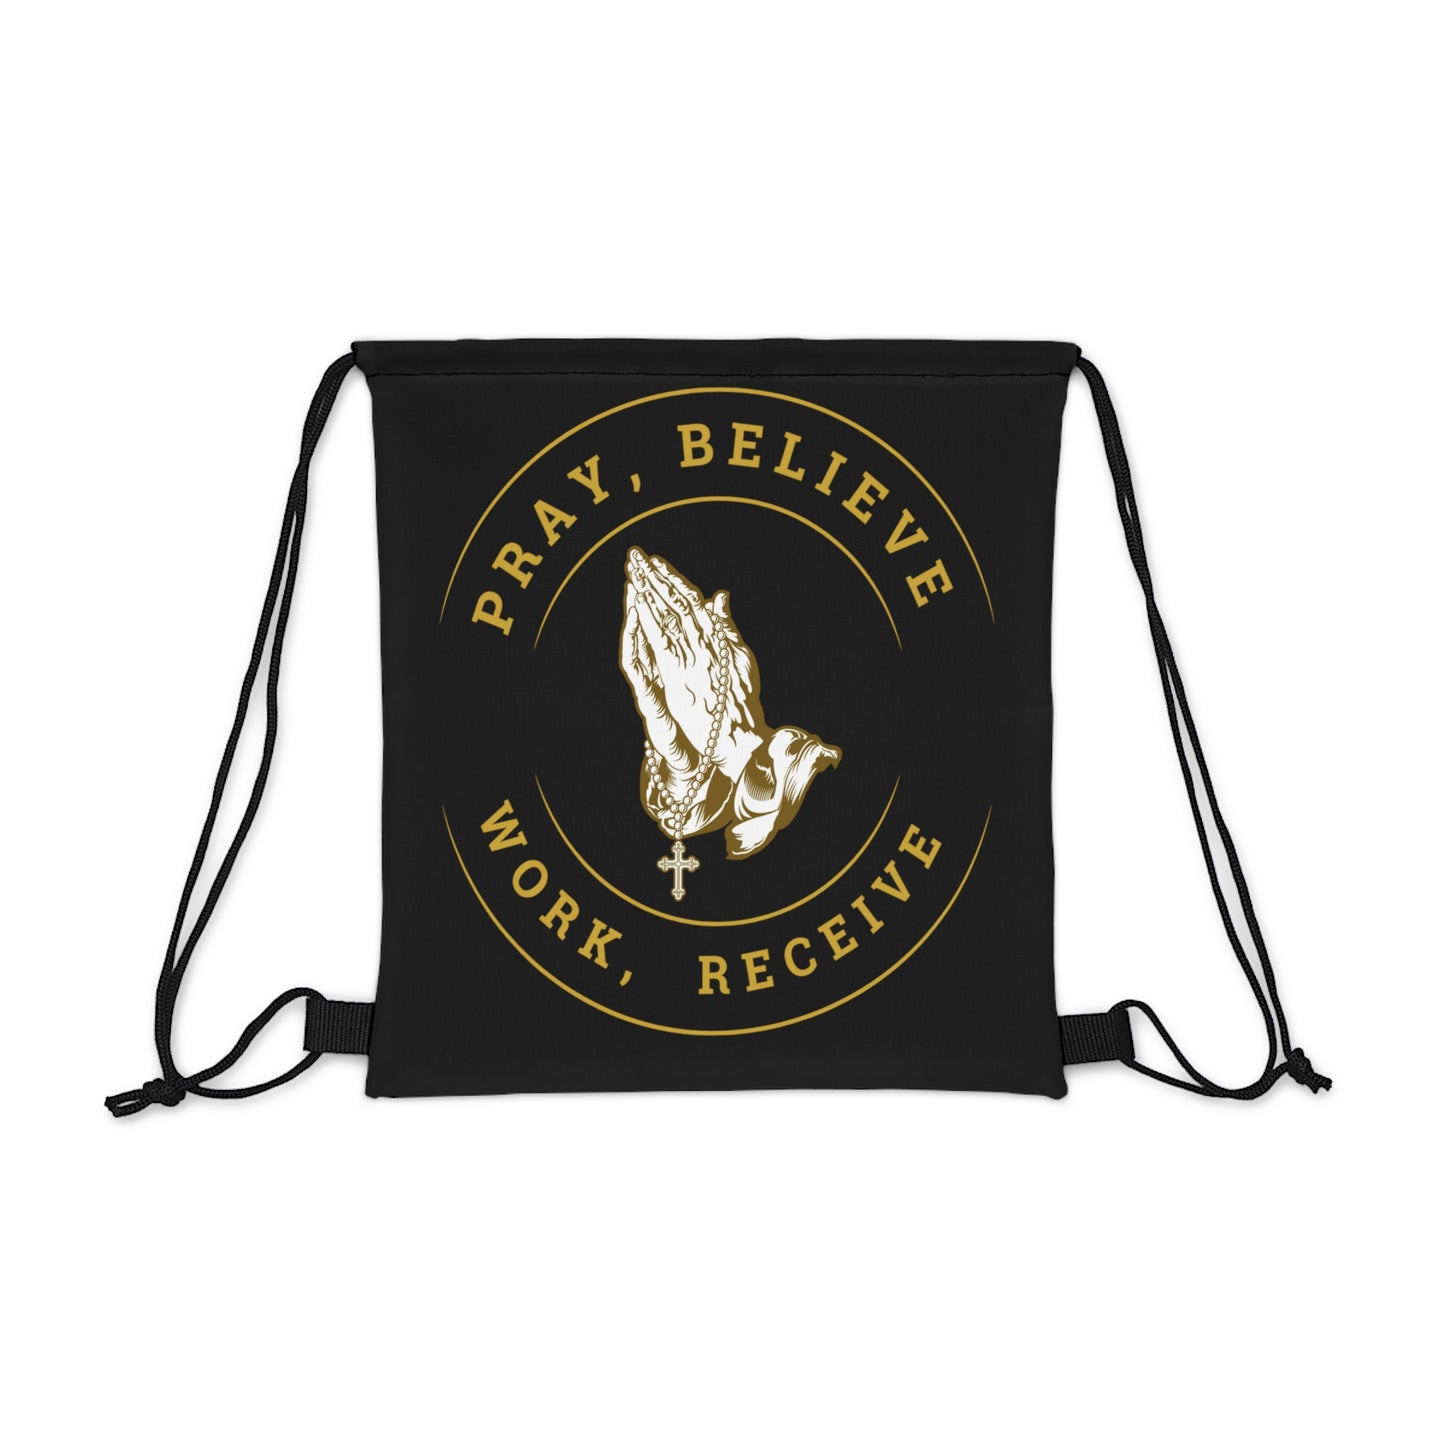 Pray, Believe, Work, Receive -  Outdoor Drawstring Bag